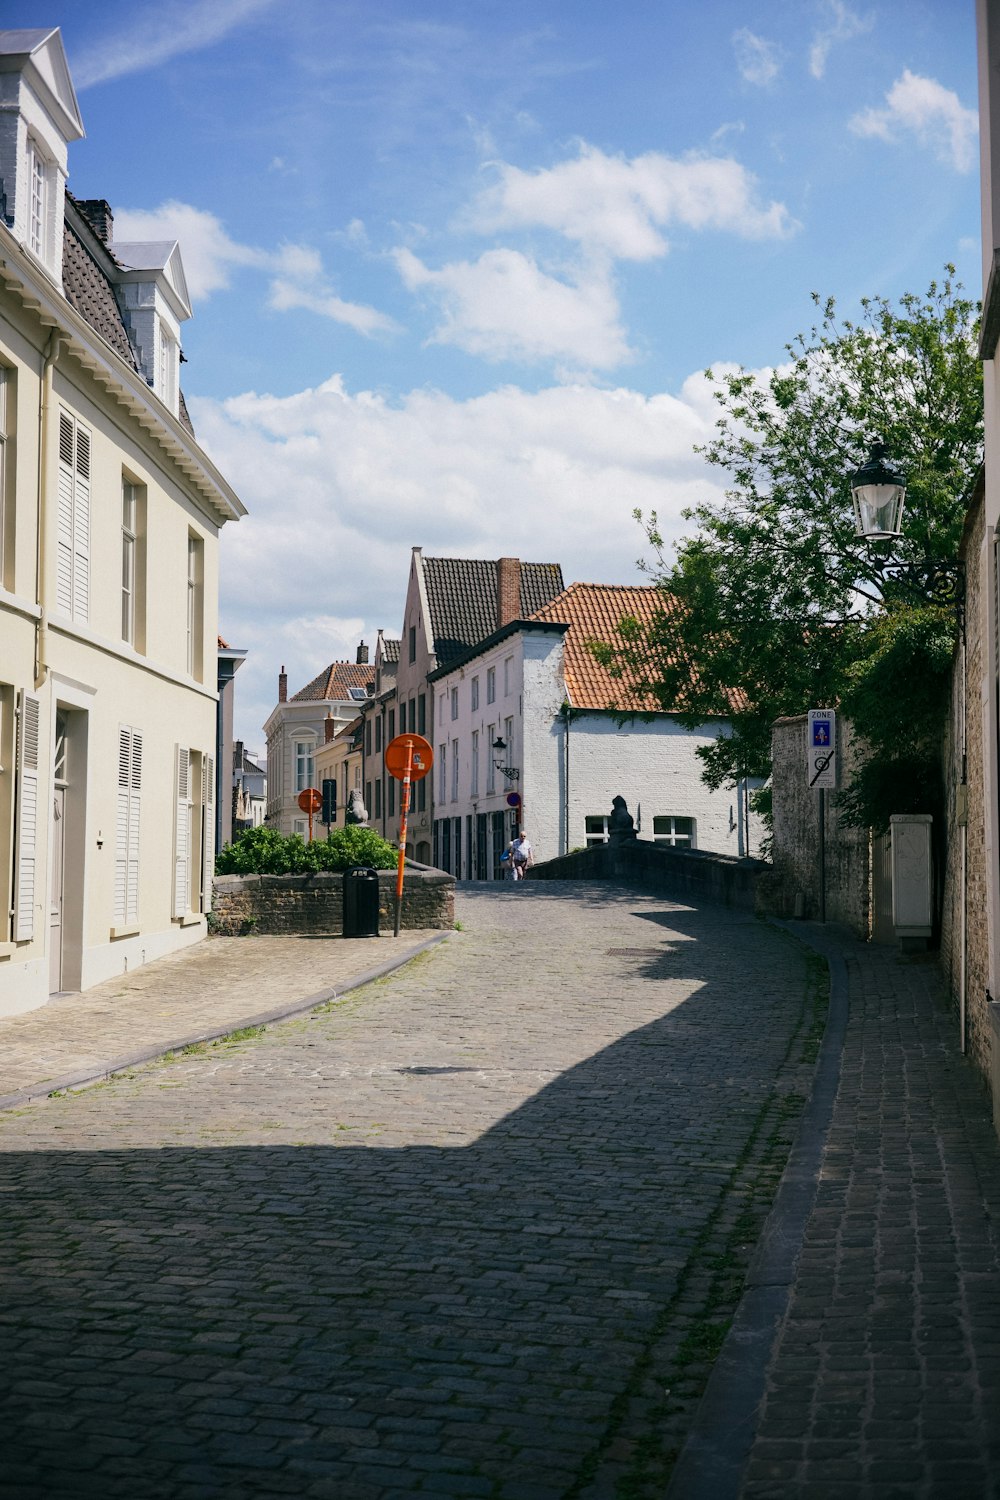 a cobblestone street in a small town